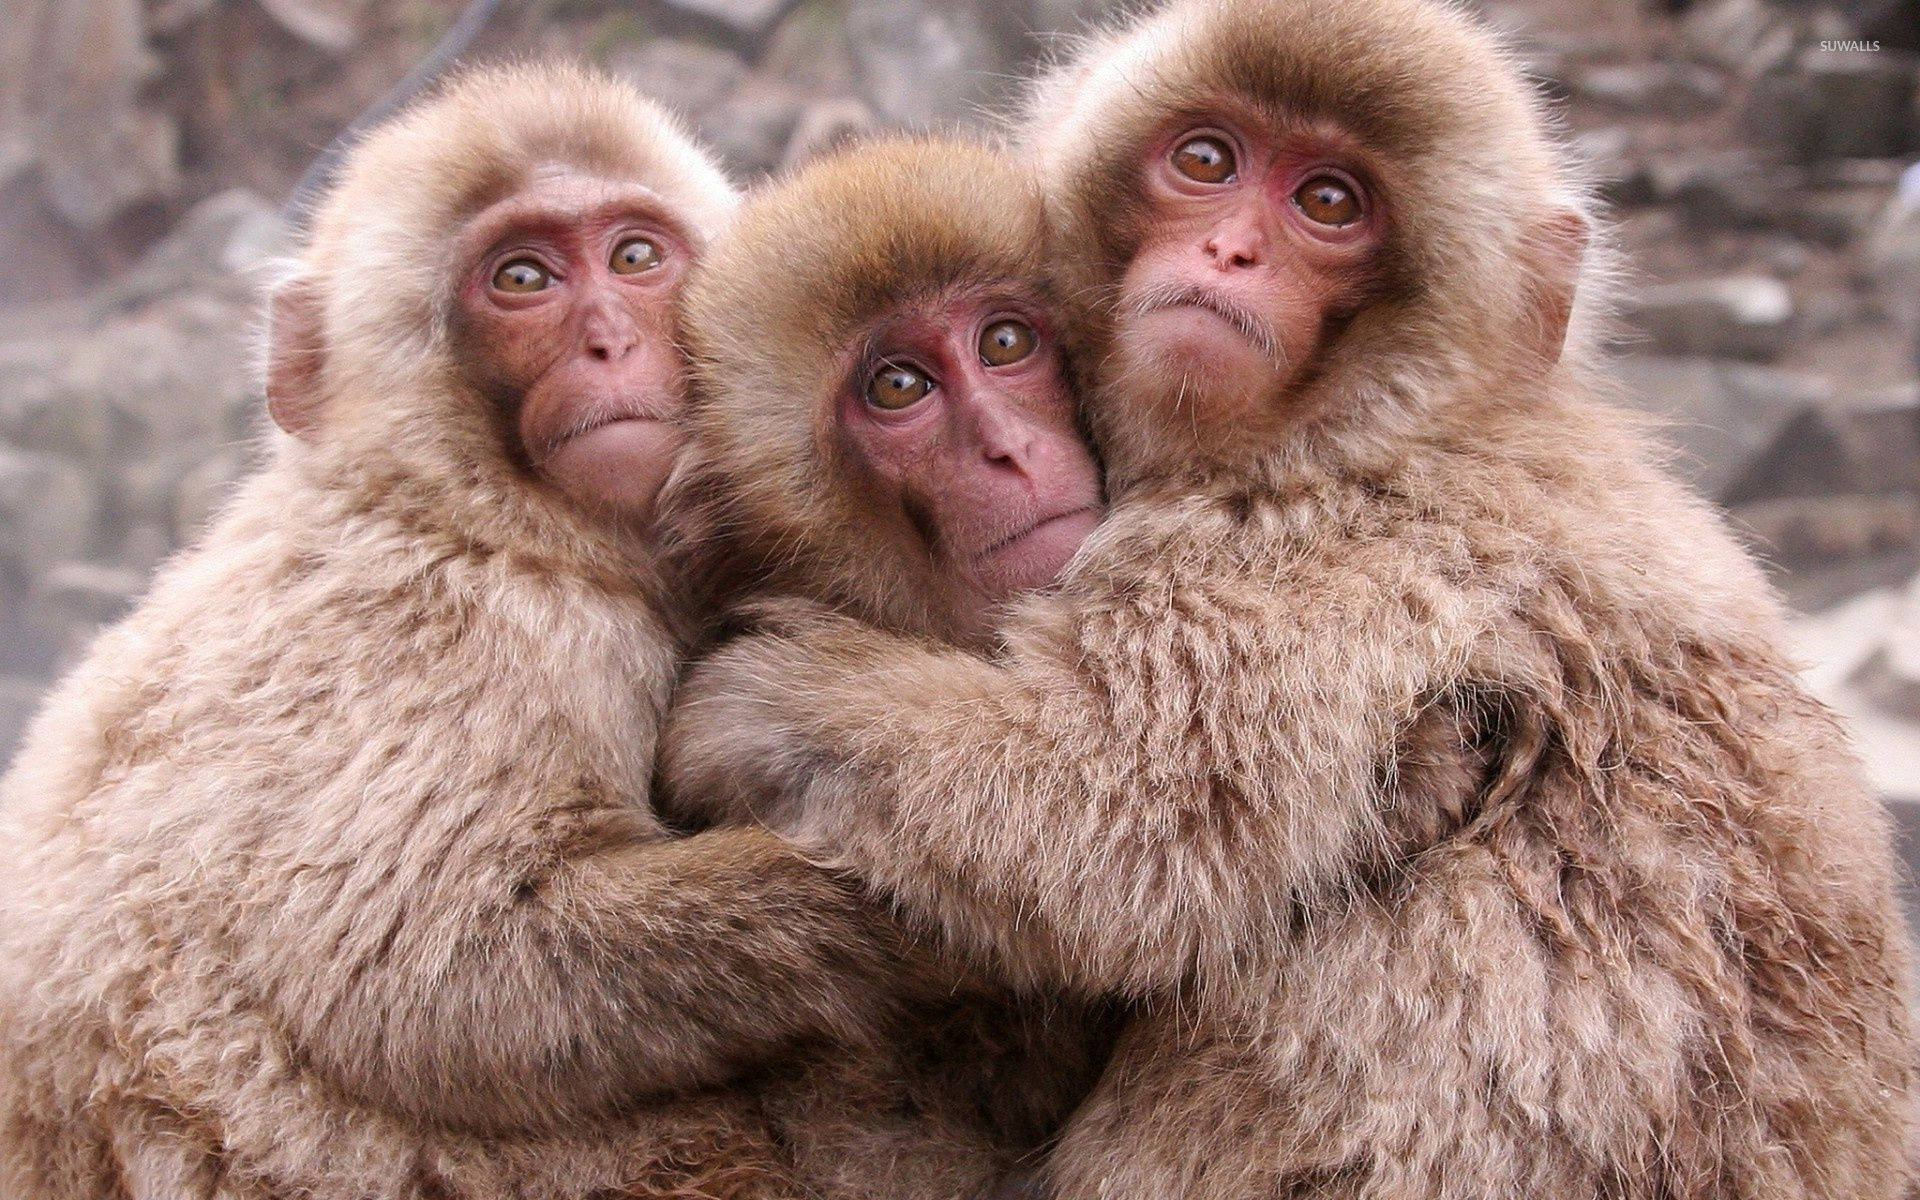 Three Adorable Monkeys Posing Together